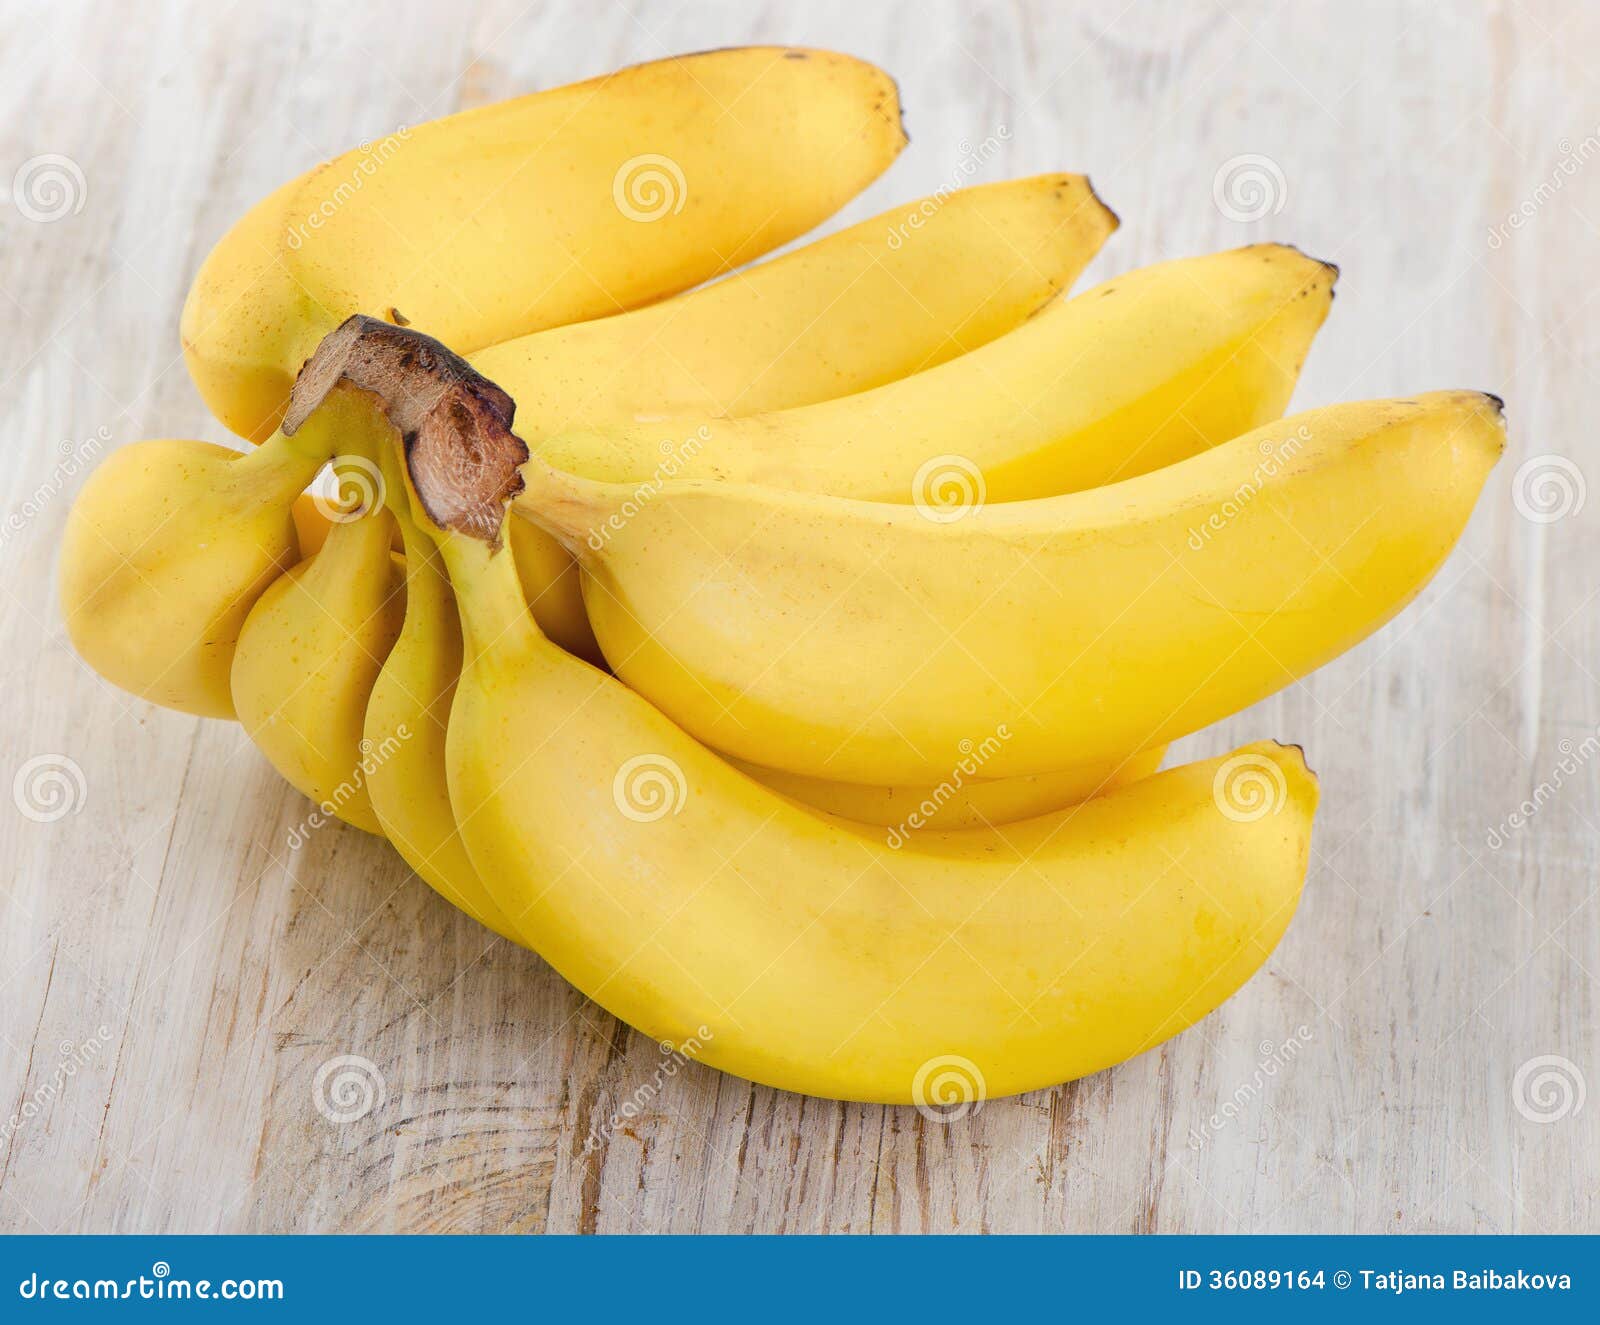 Сколько лежат бананы